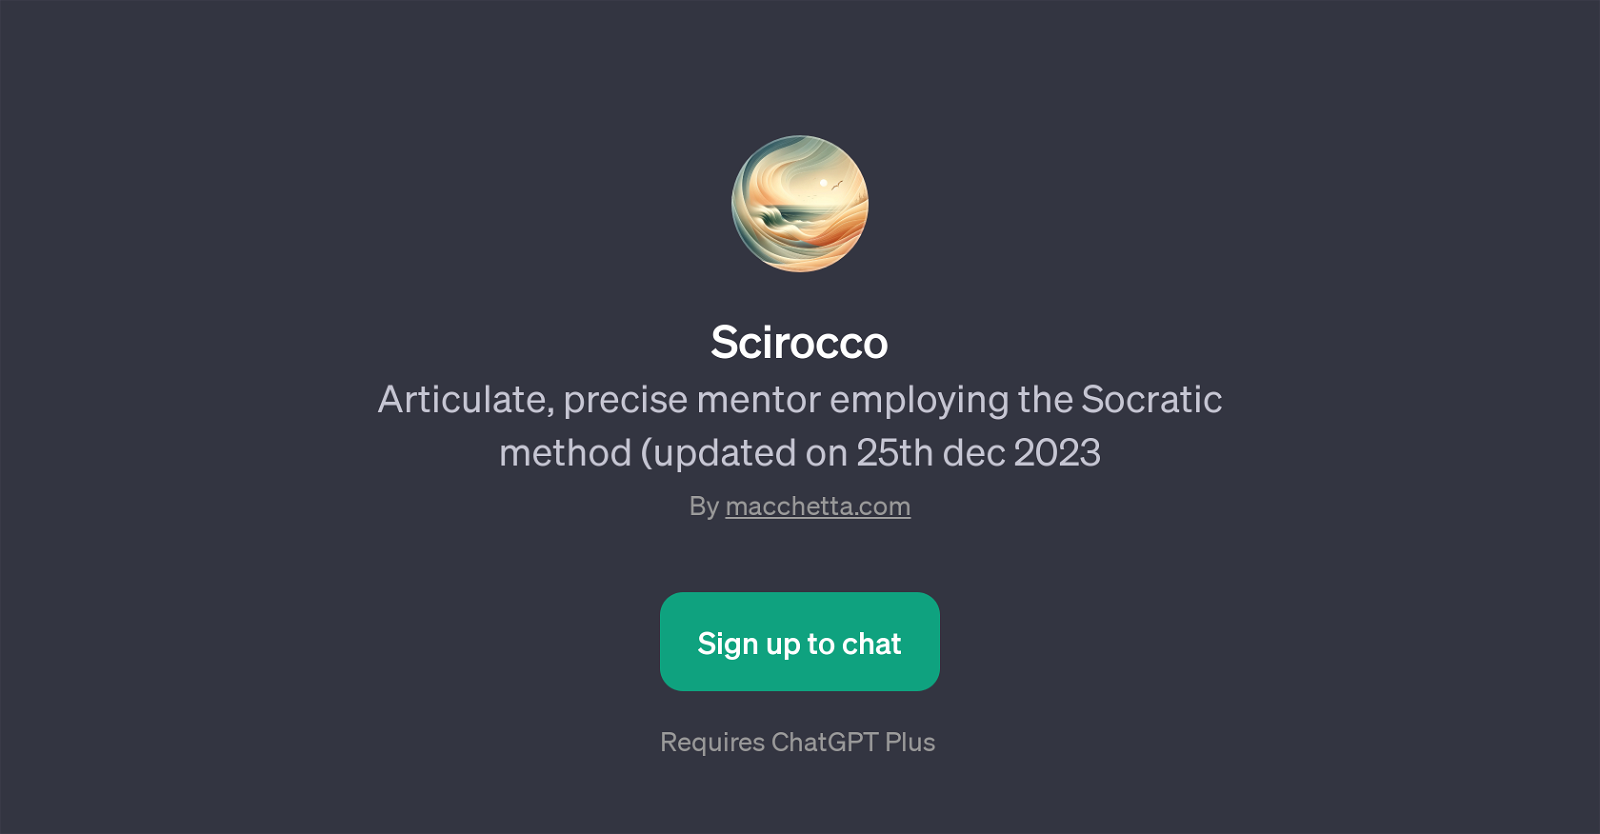 Scirocco website